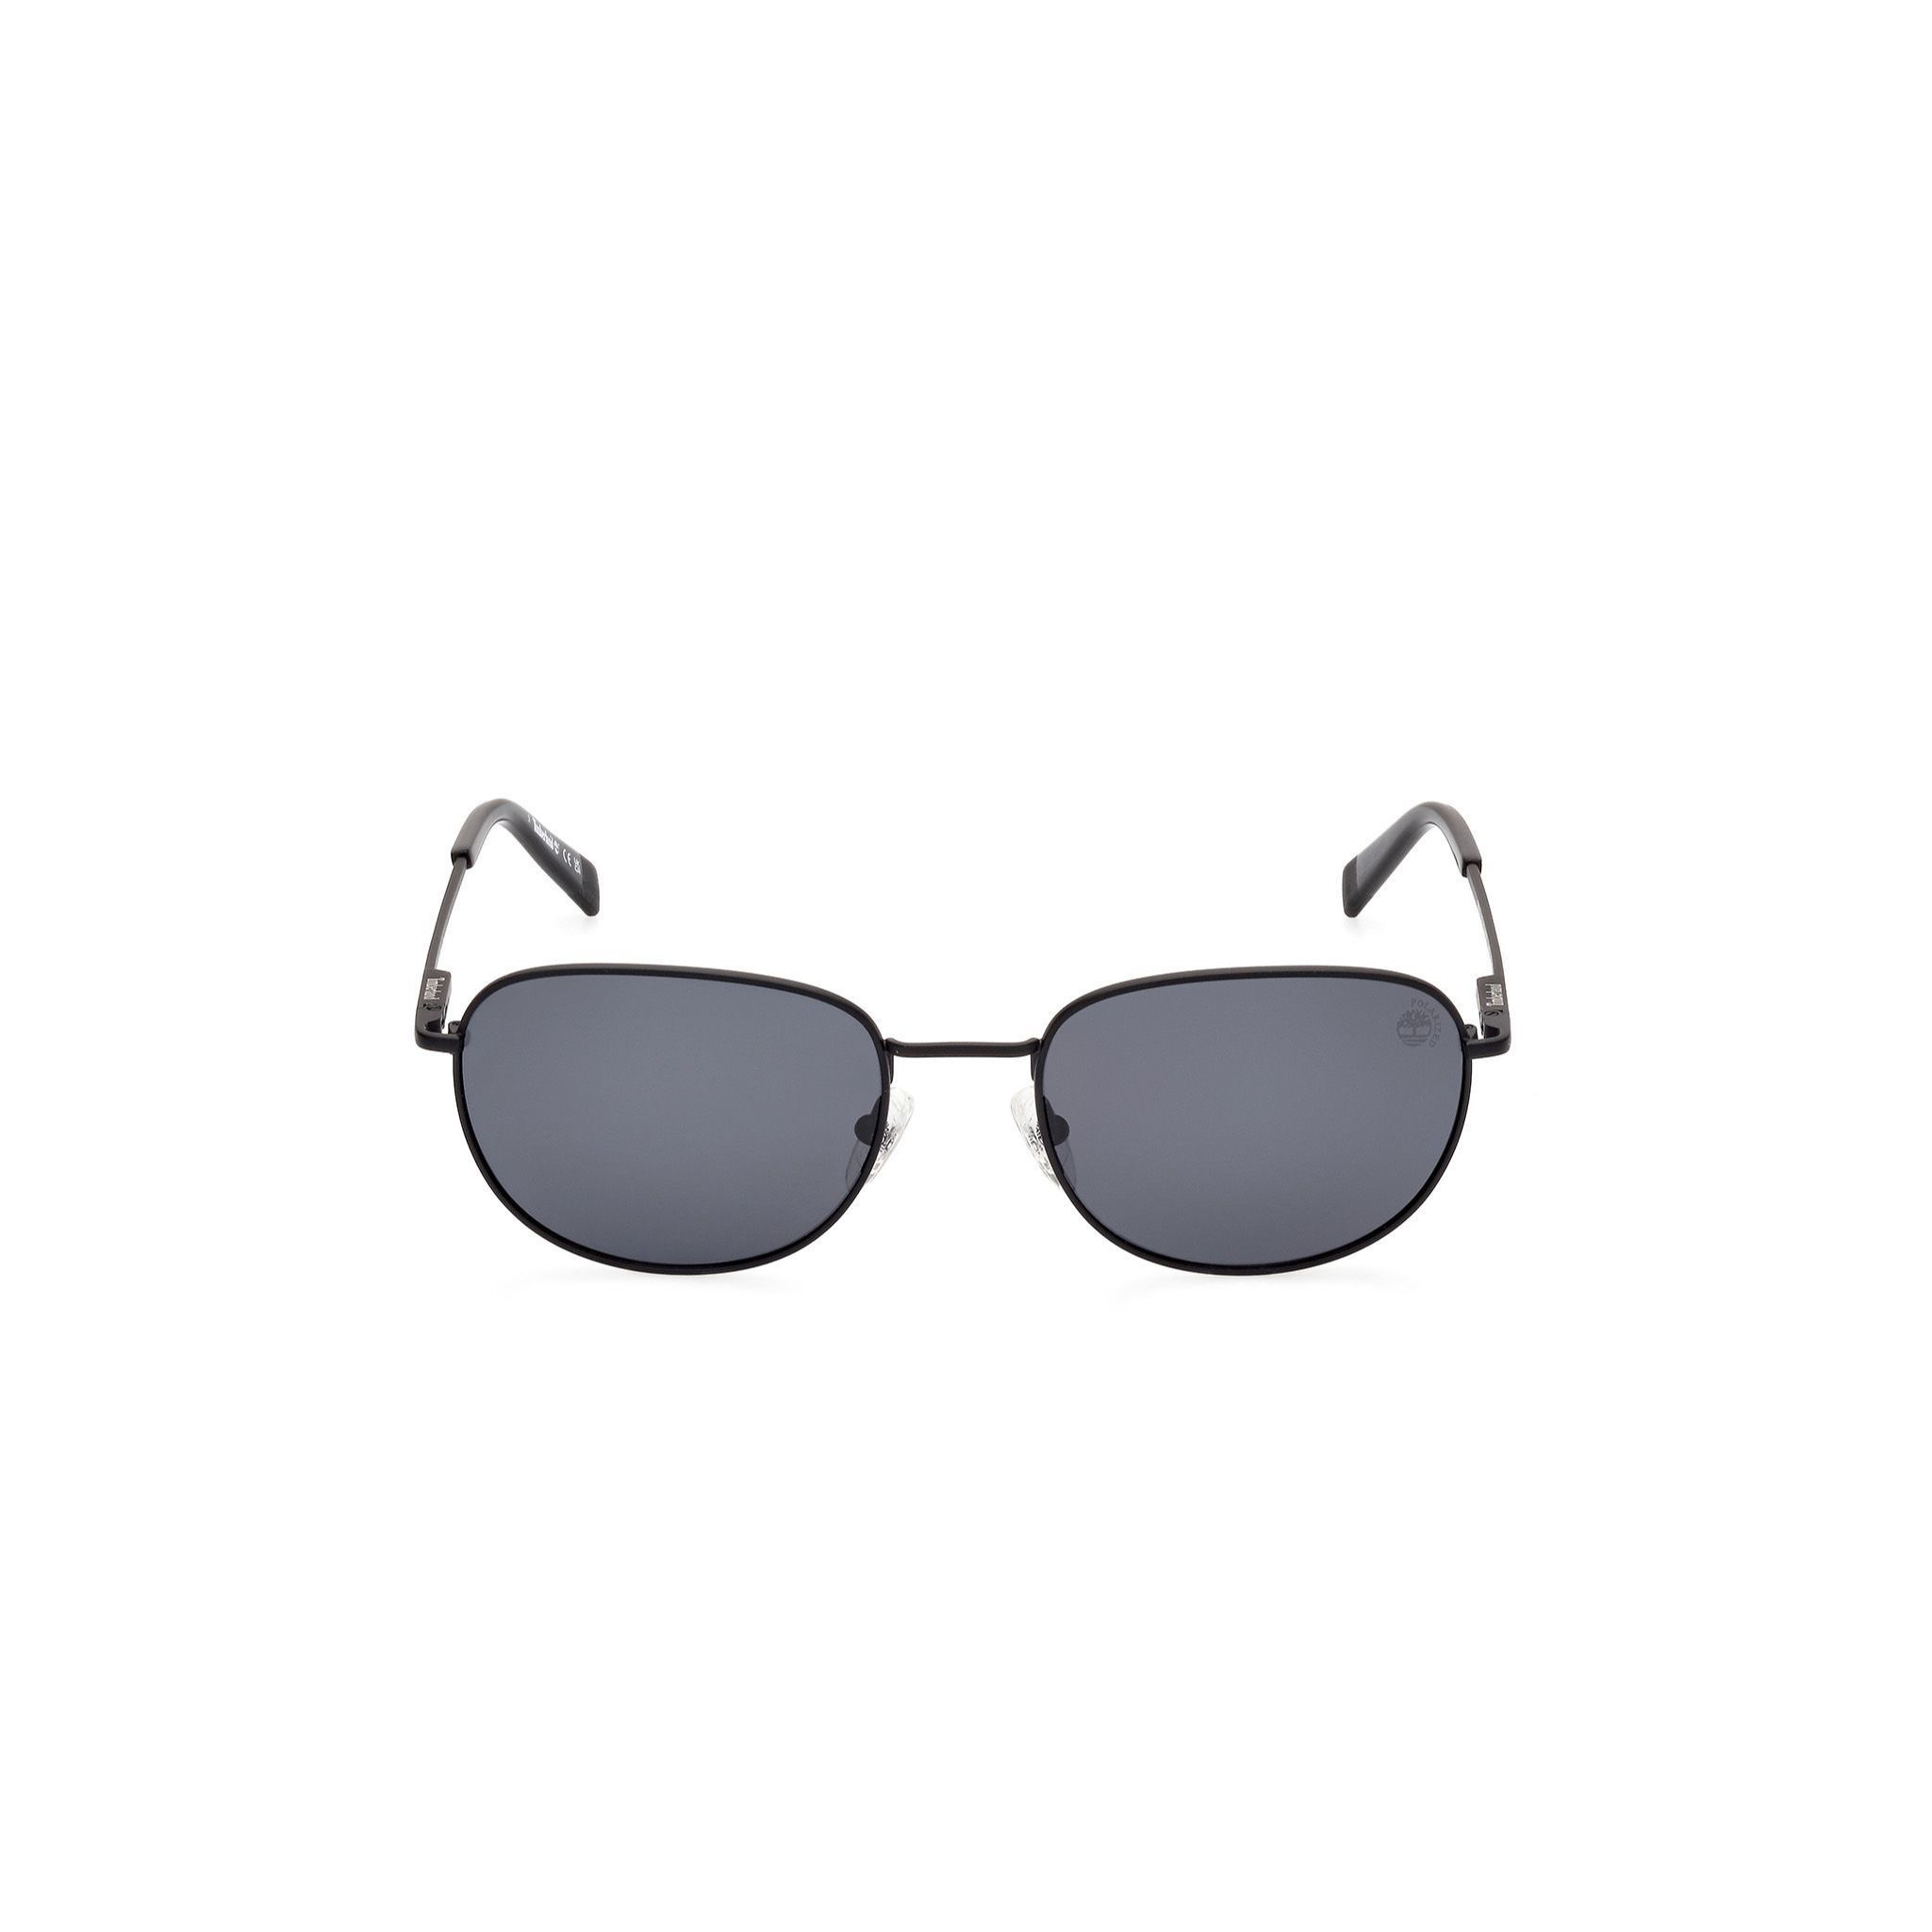 TB9339 Oval Sunglasses 02D - size 54